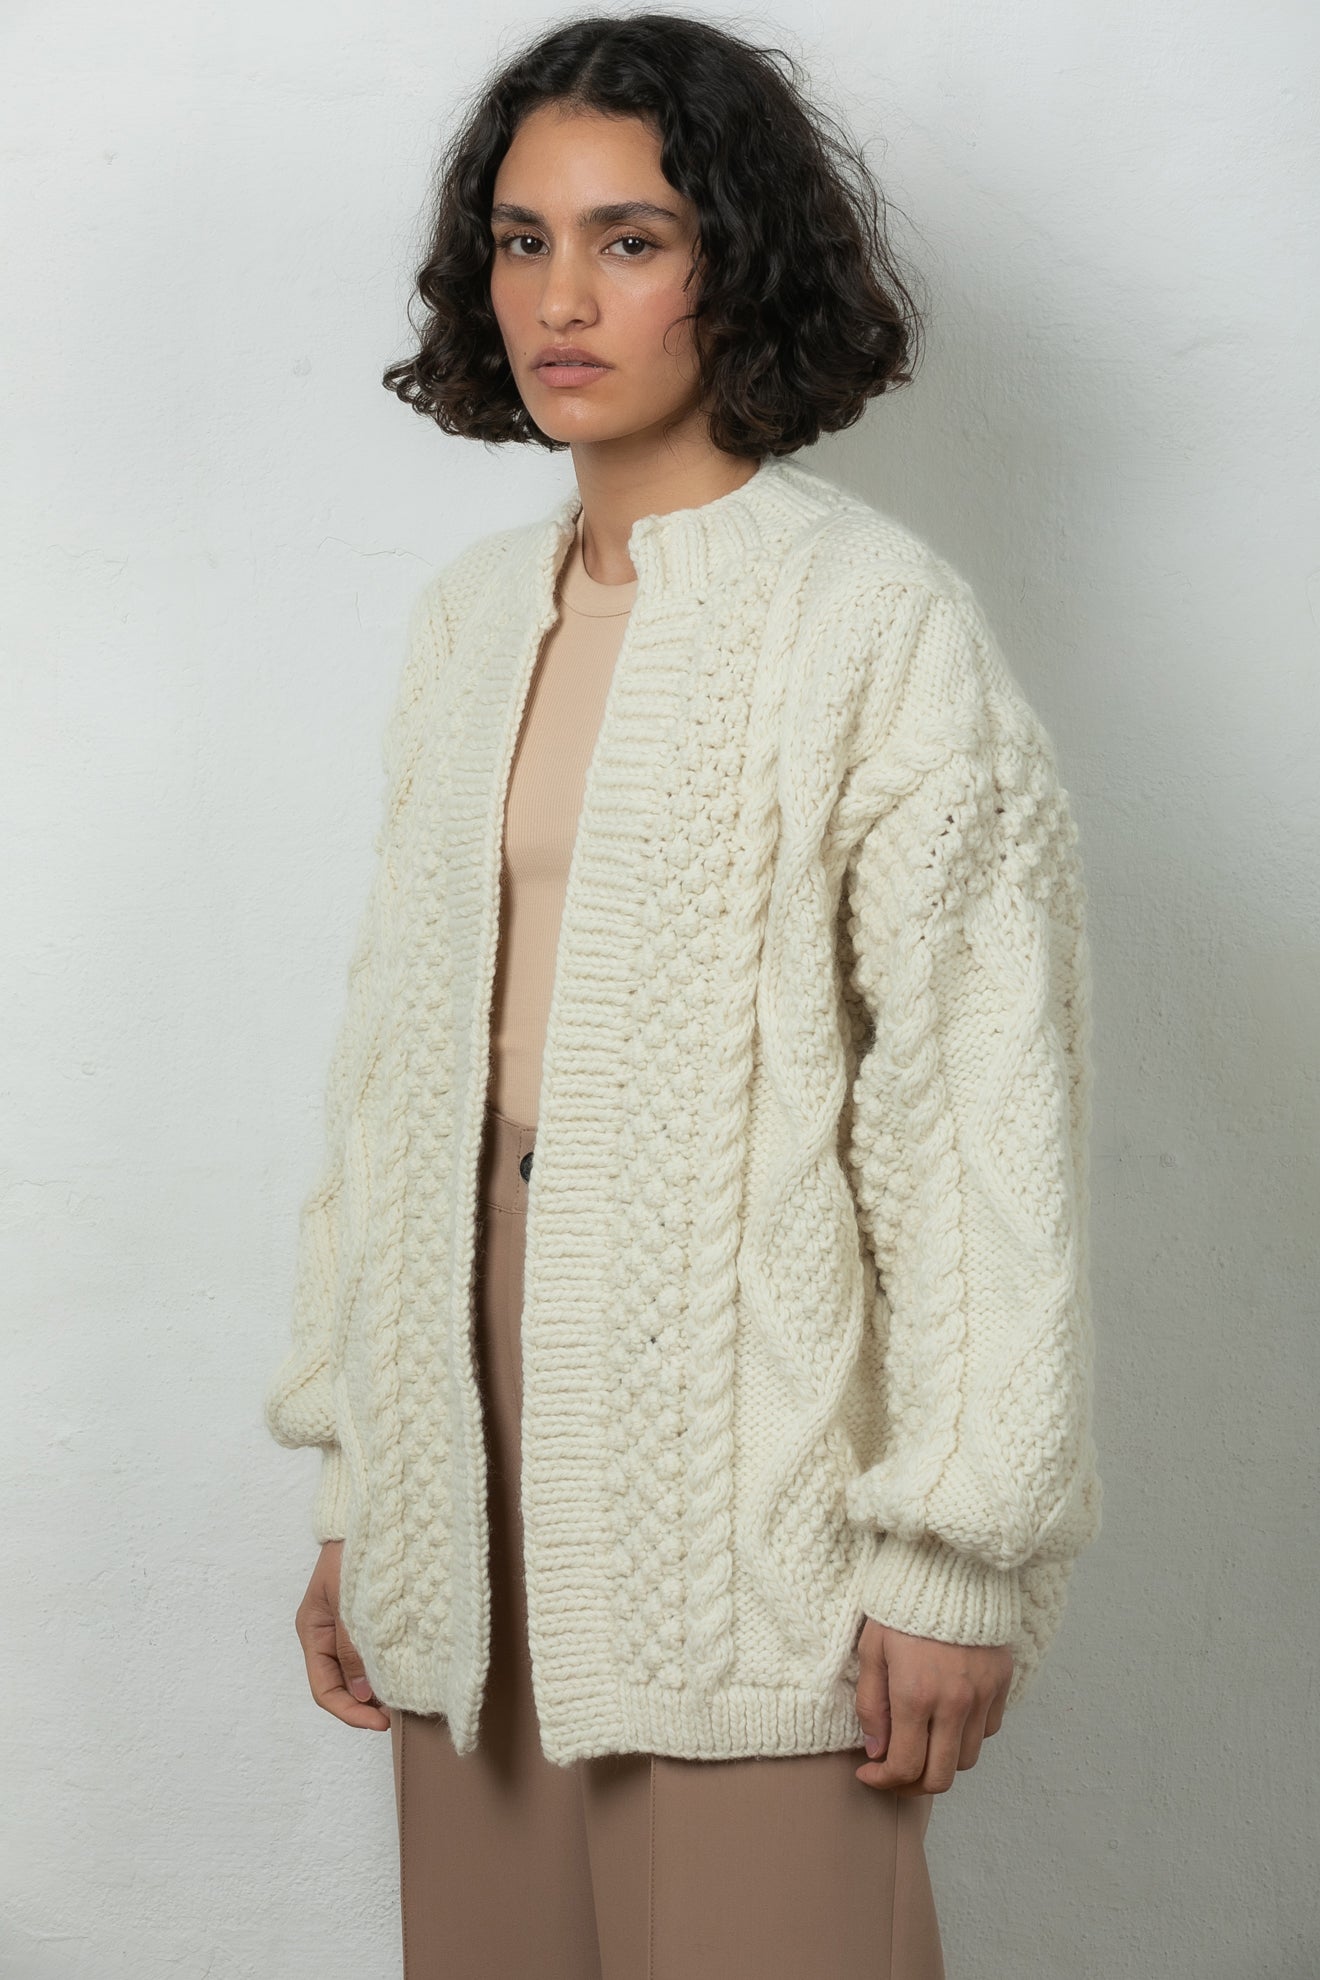 wool cardigan knitted winter Mr Mittens ivory cream white